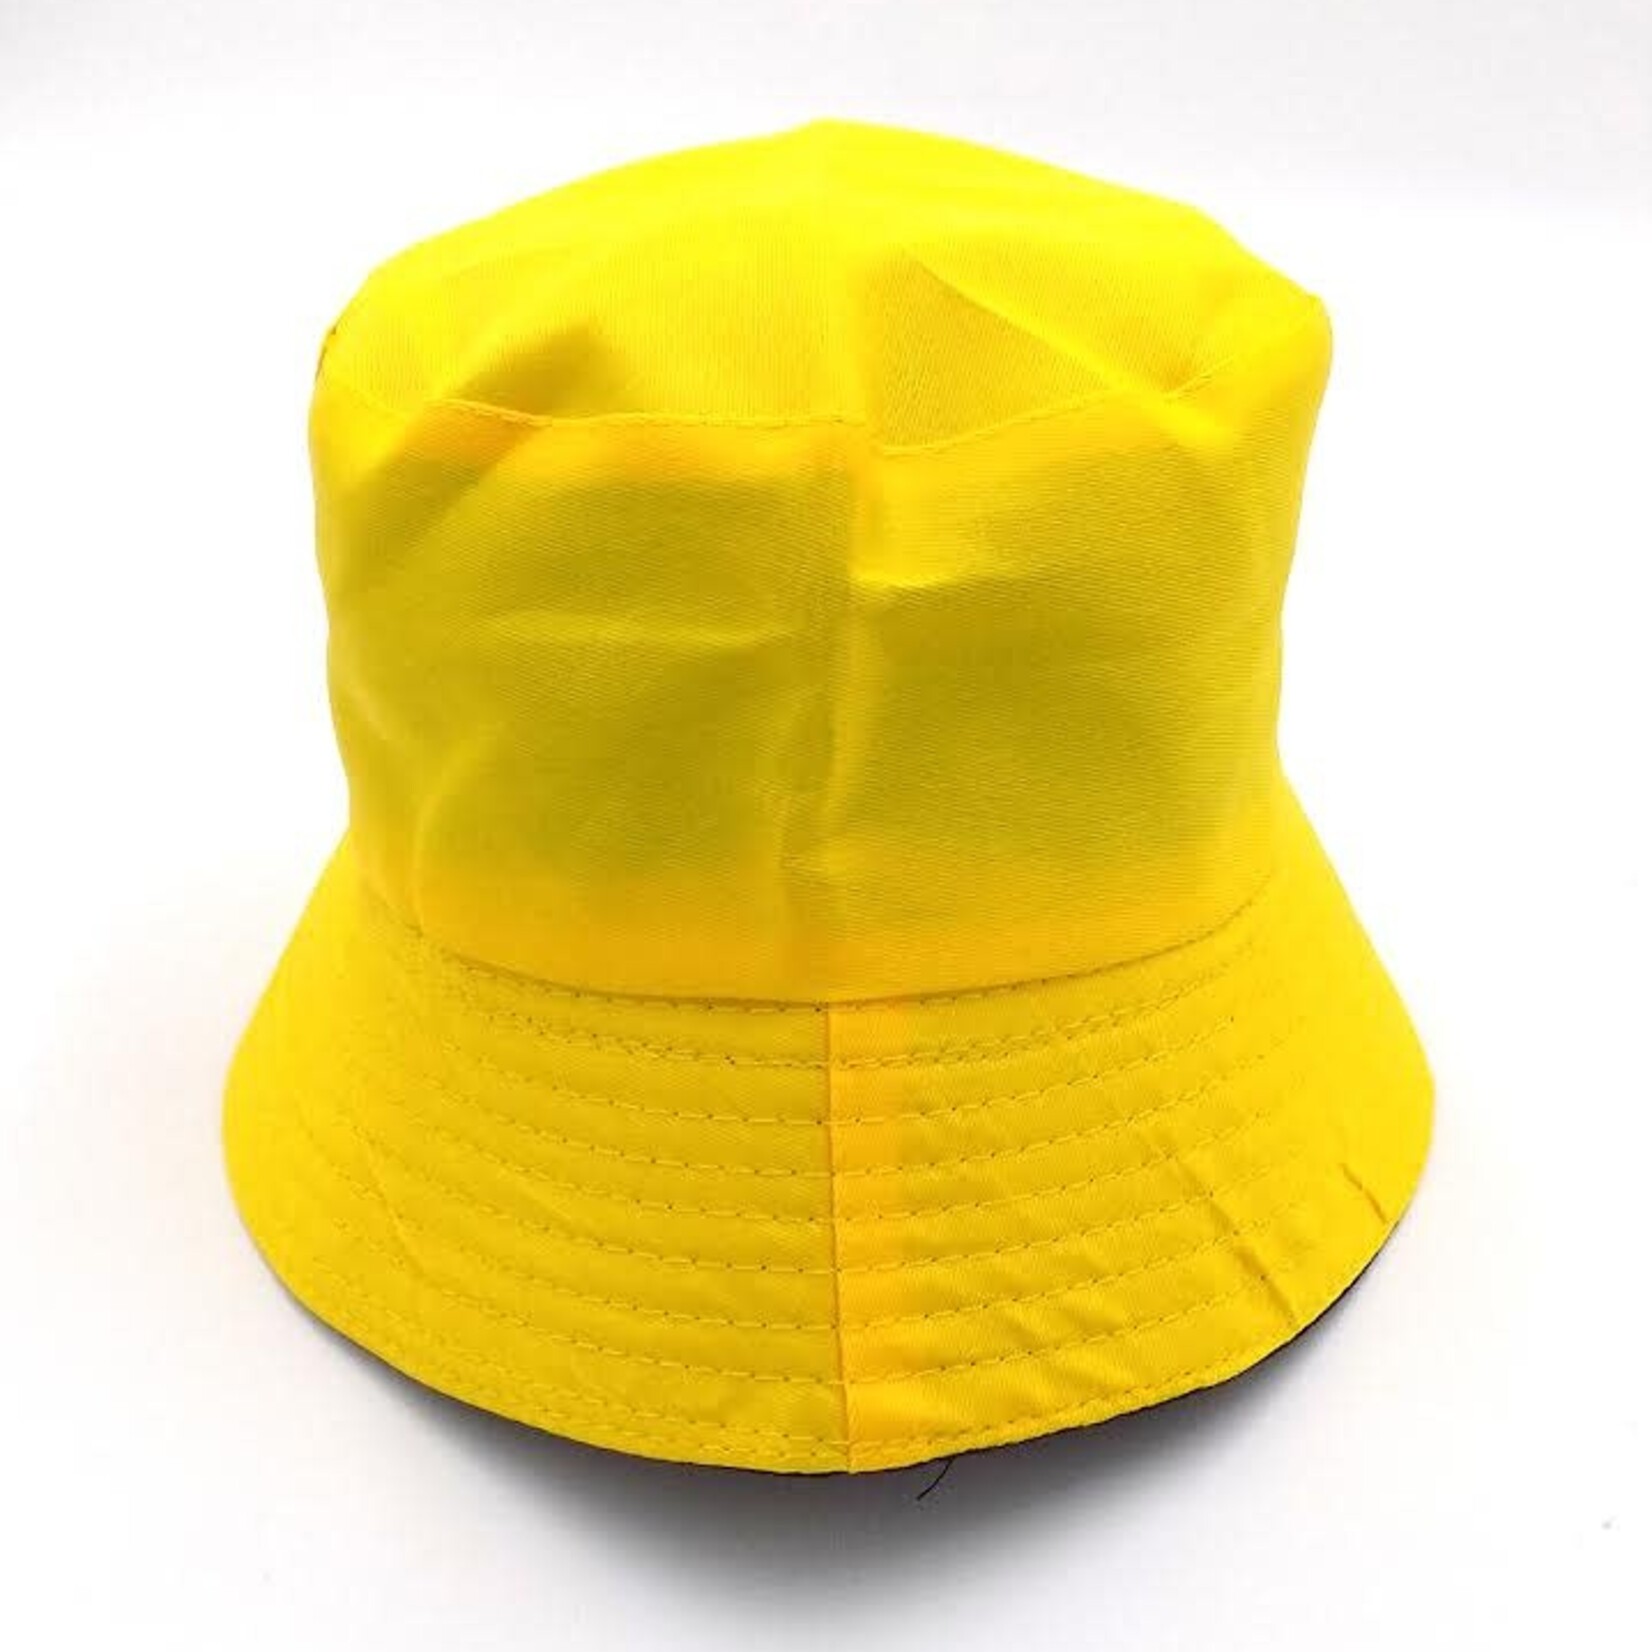 Bucket Hat - Yellow